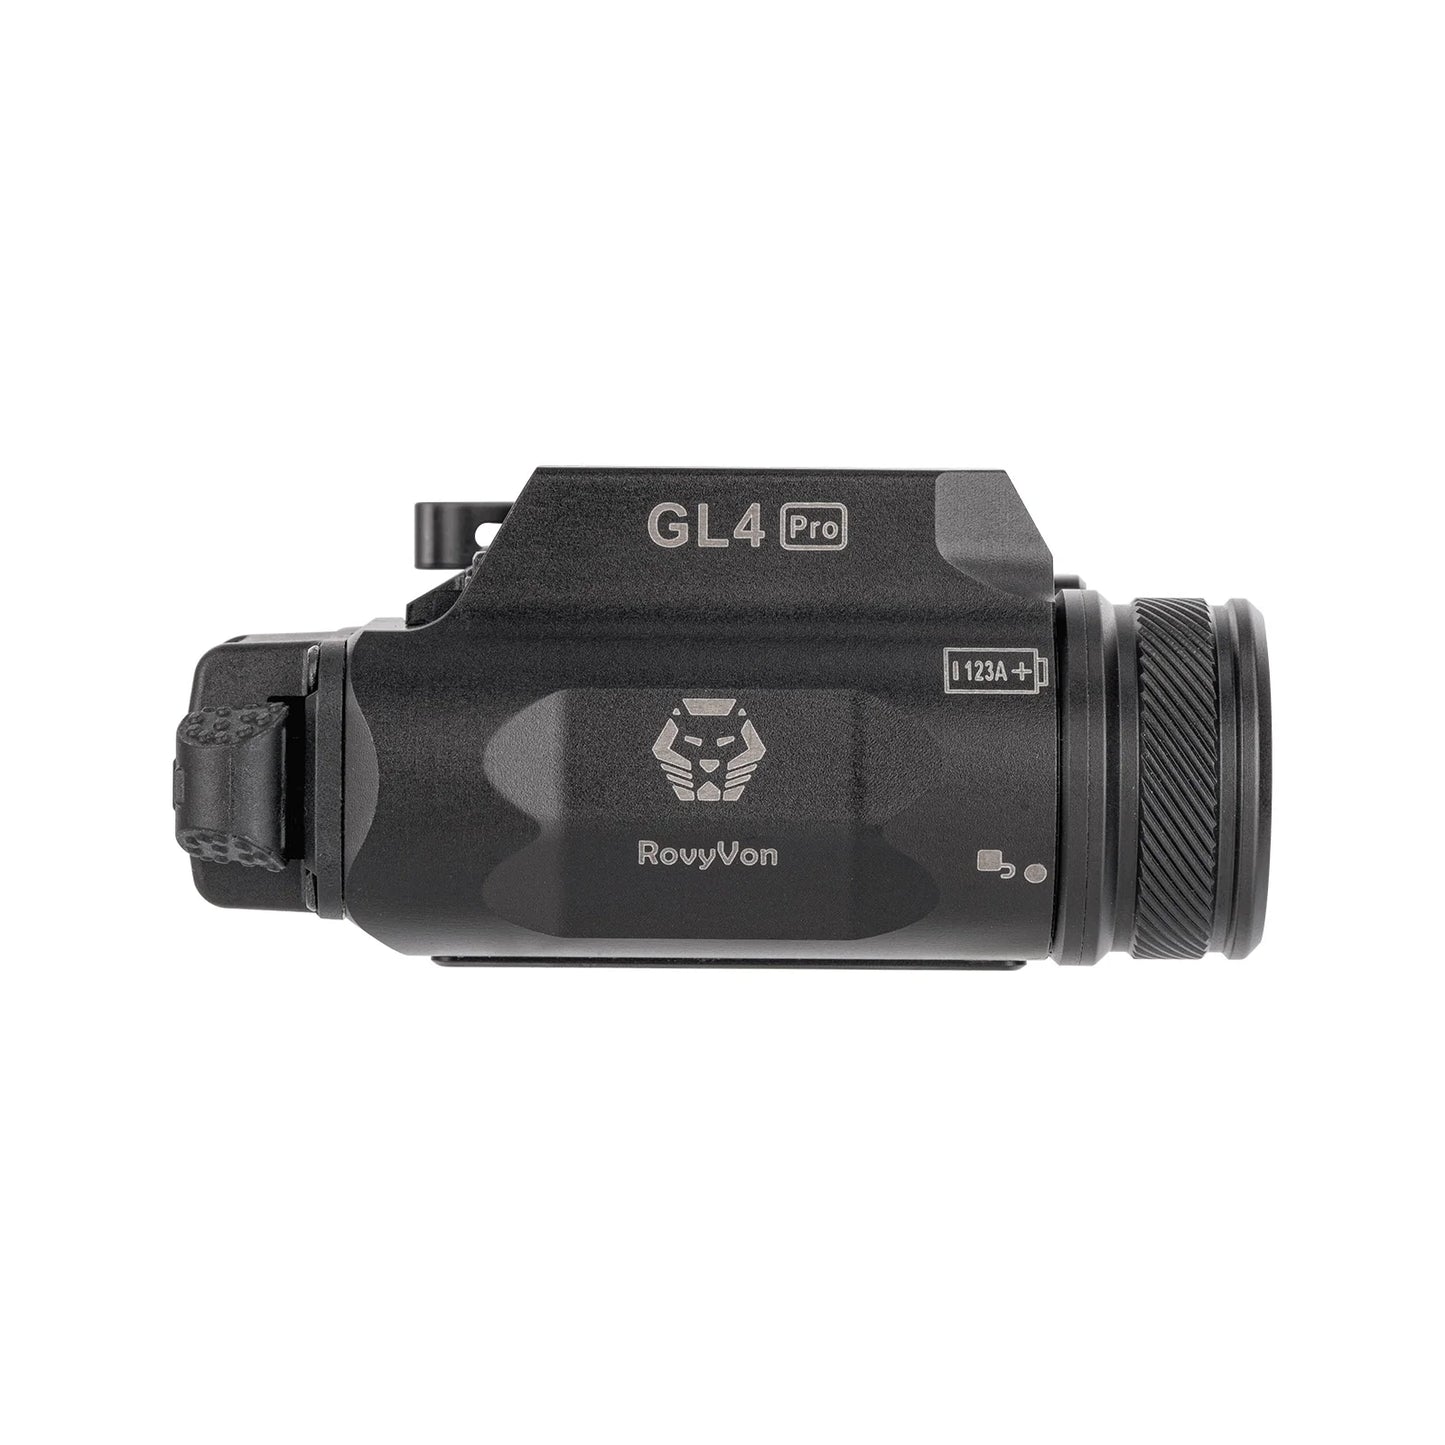 RovyVon GL4 Pro Rail Mounted Light IR Laser with Illuminator